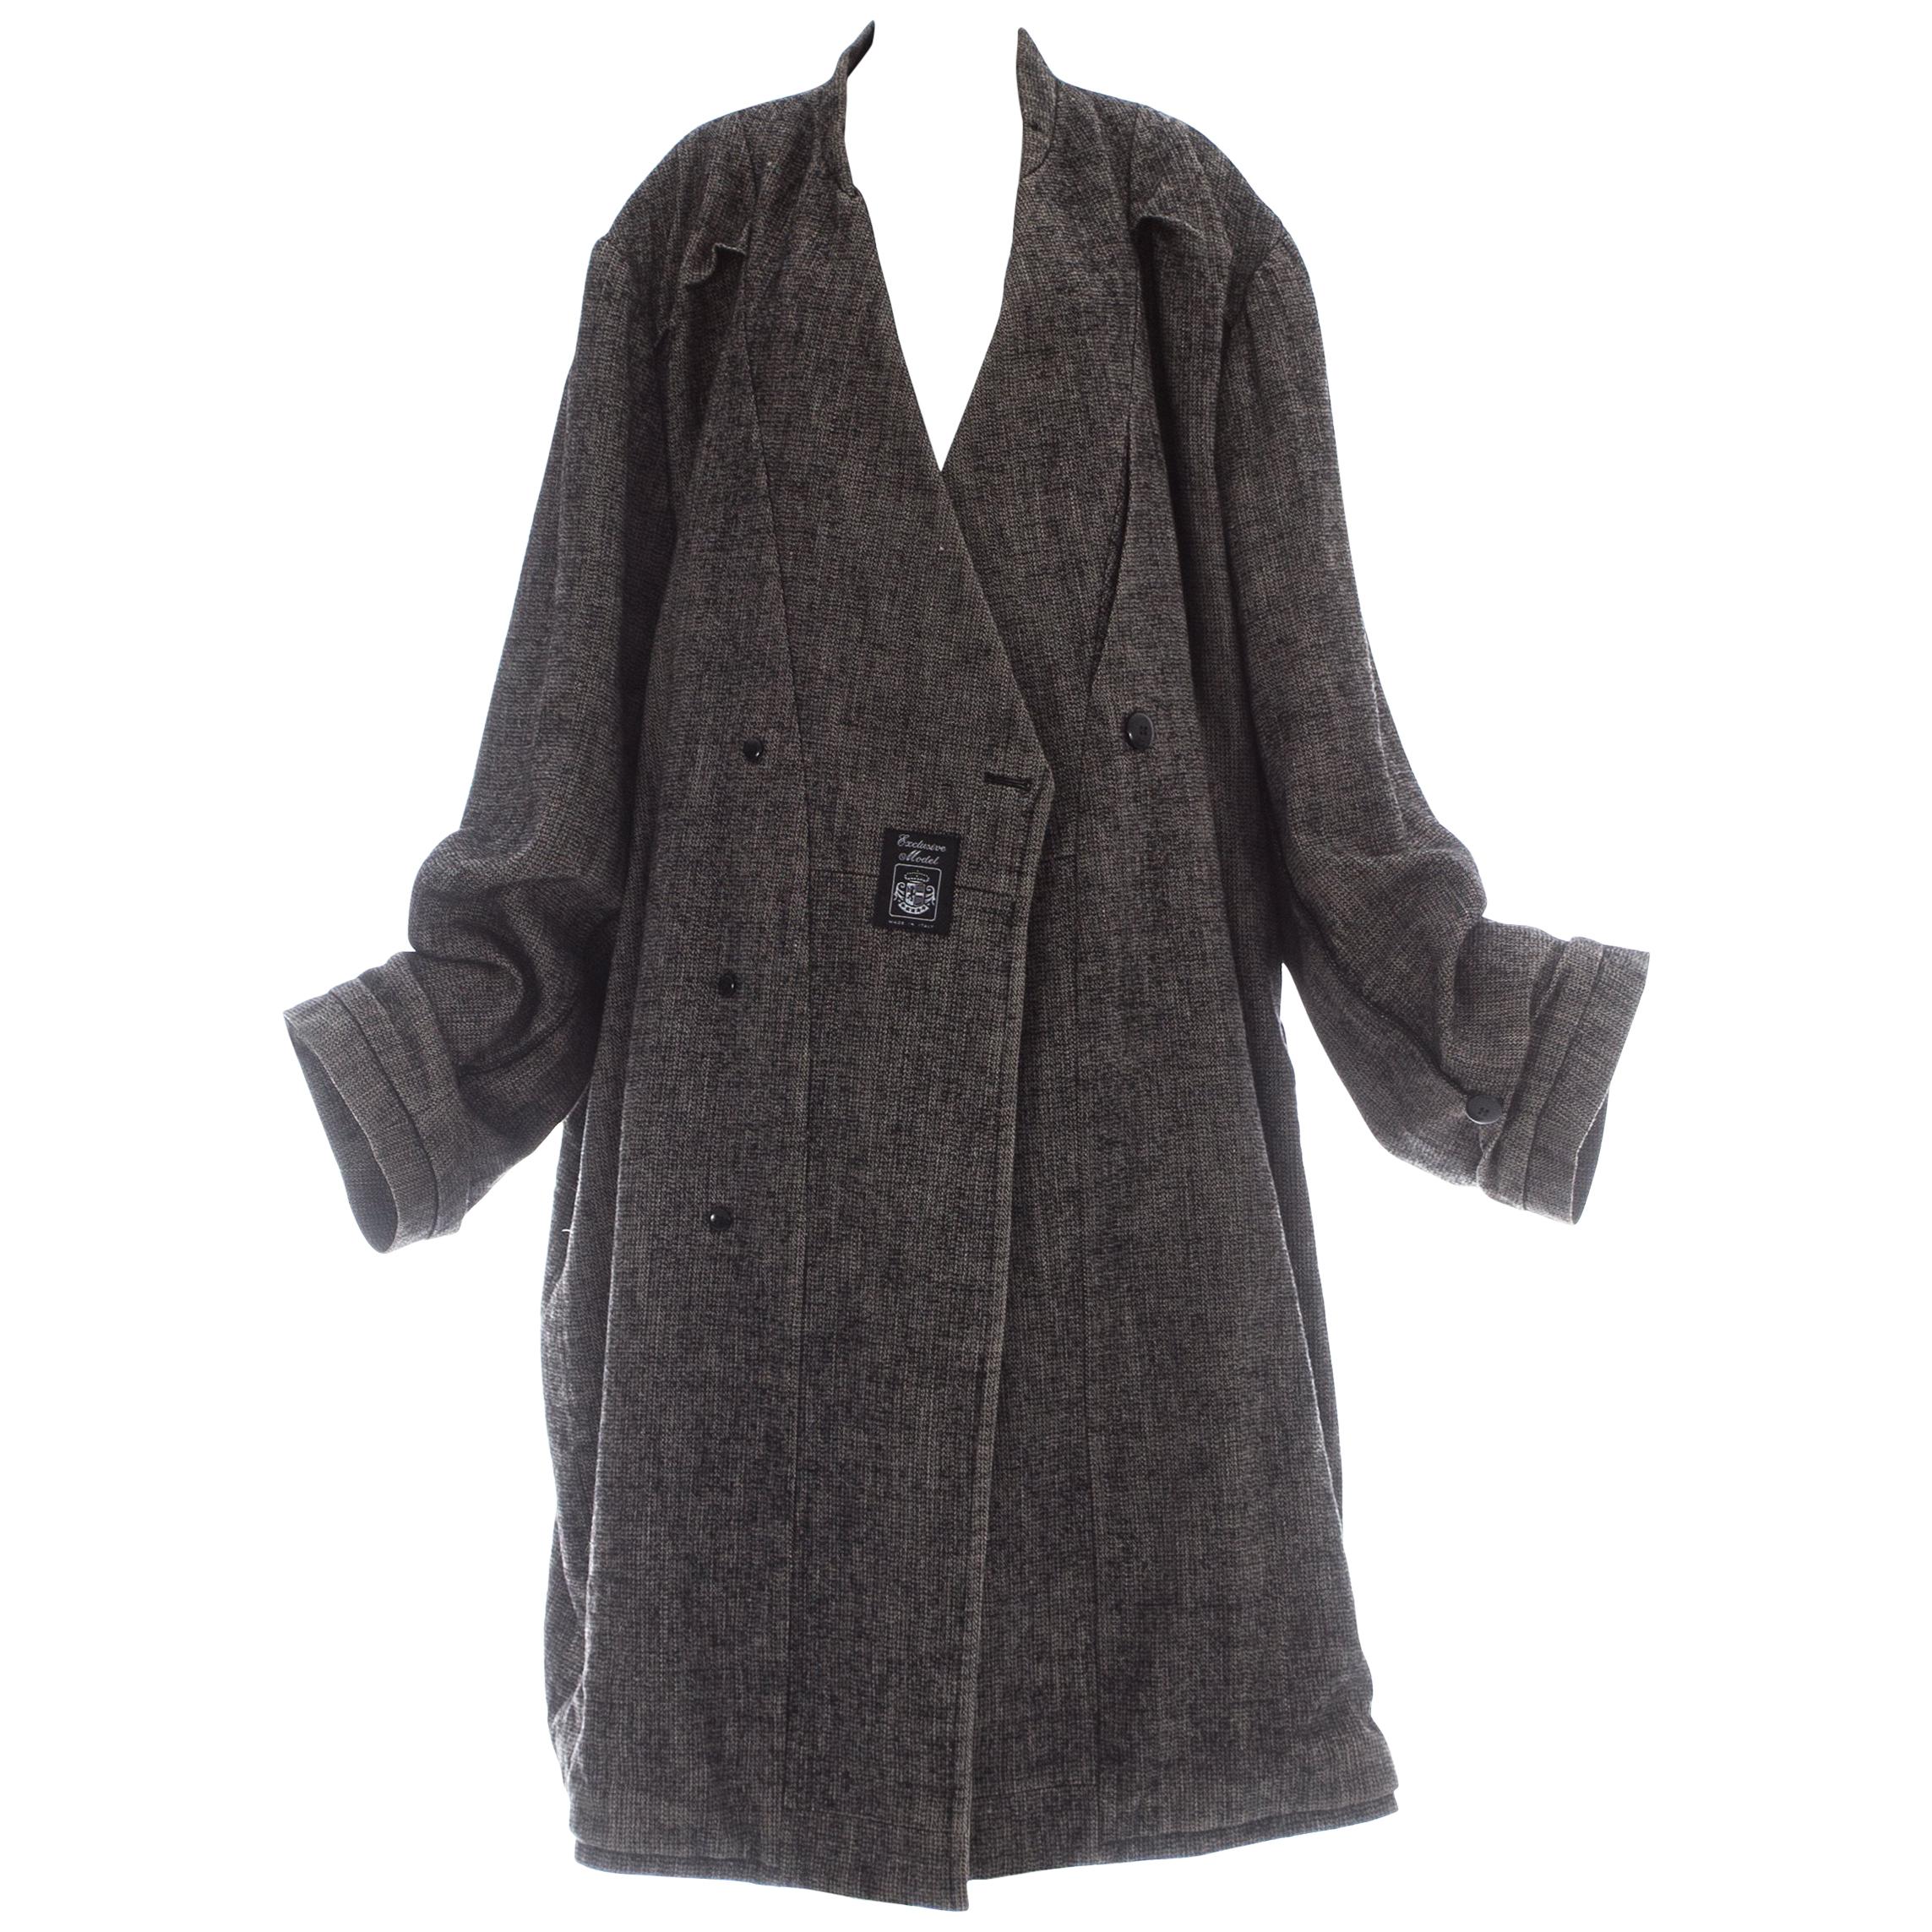 Martin Margiela grey wool and linen XXL size 78 double inside coat, fw 2000 For Sale